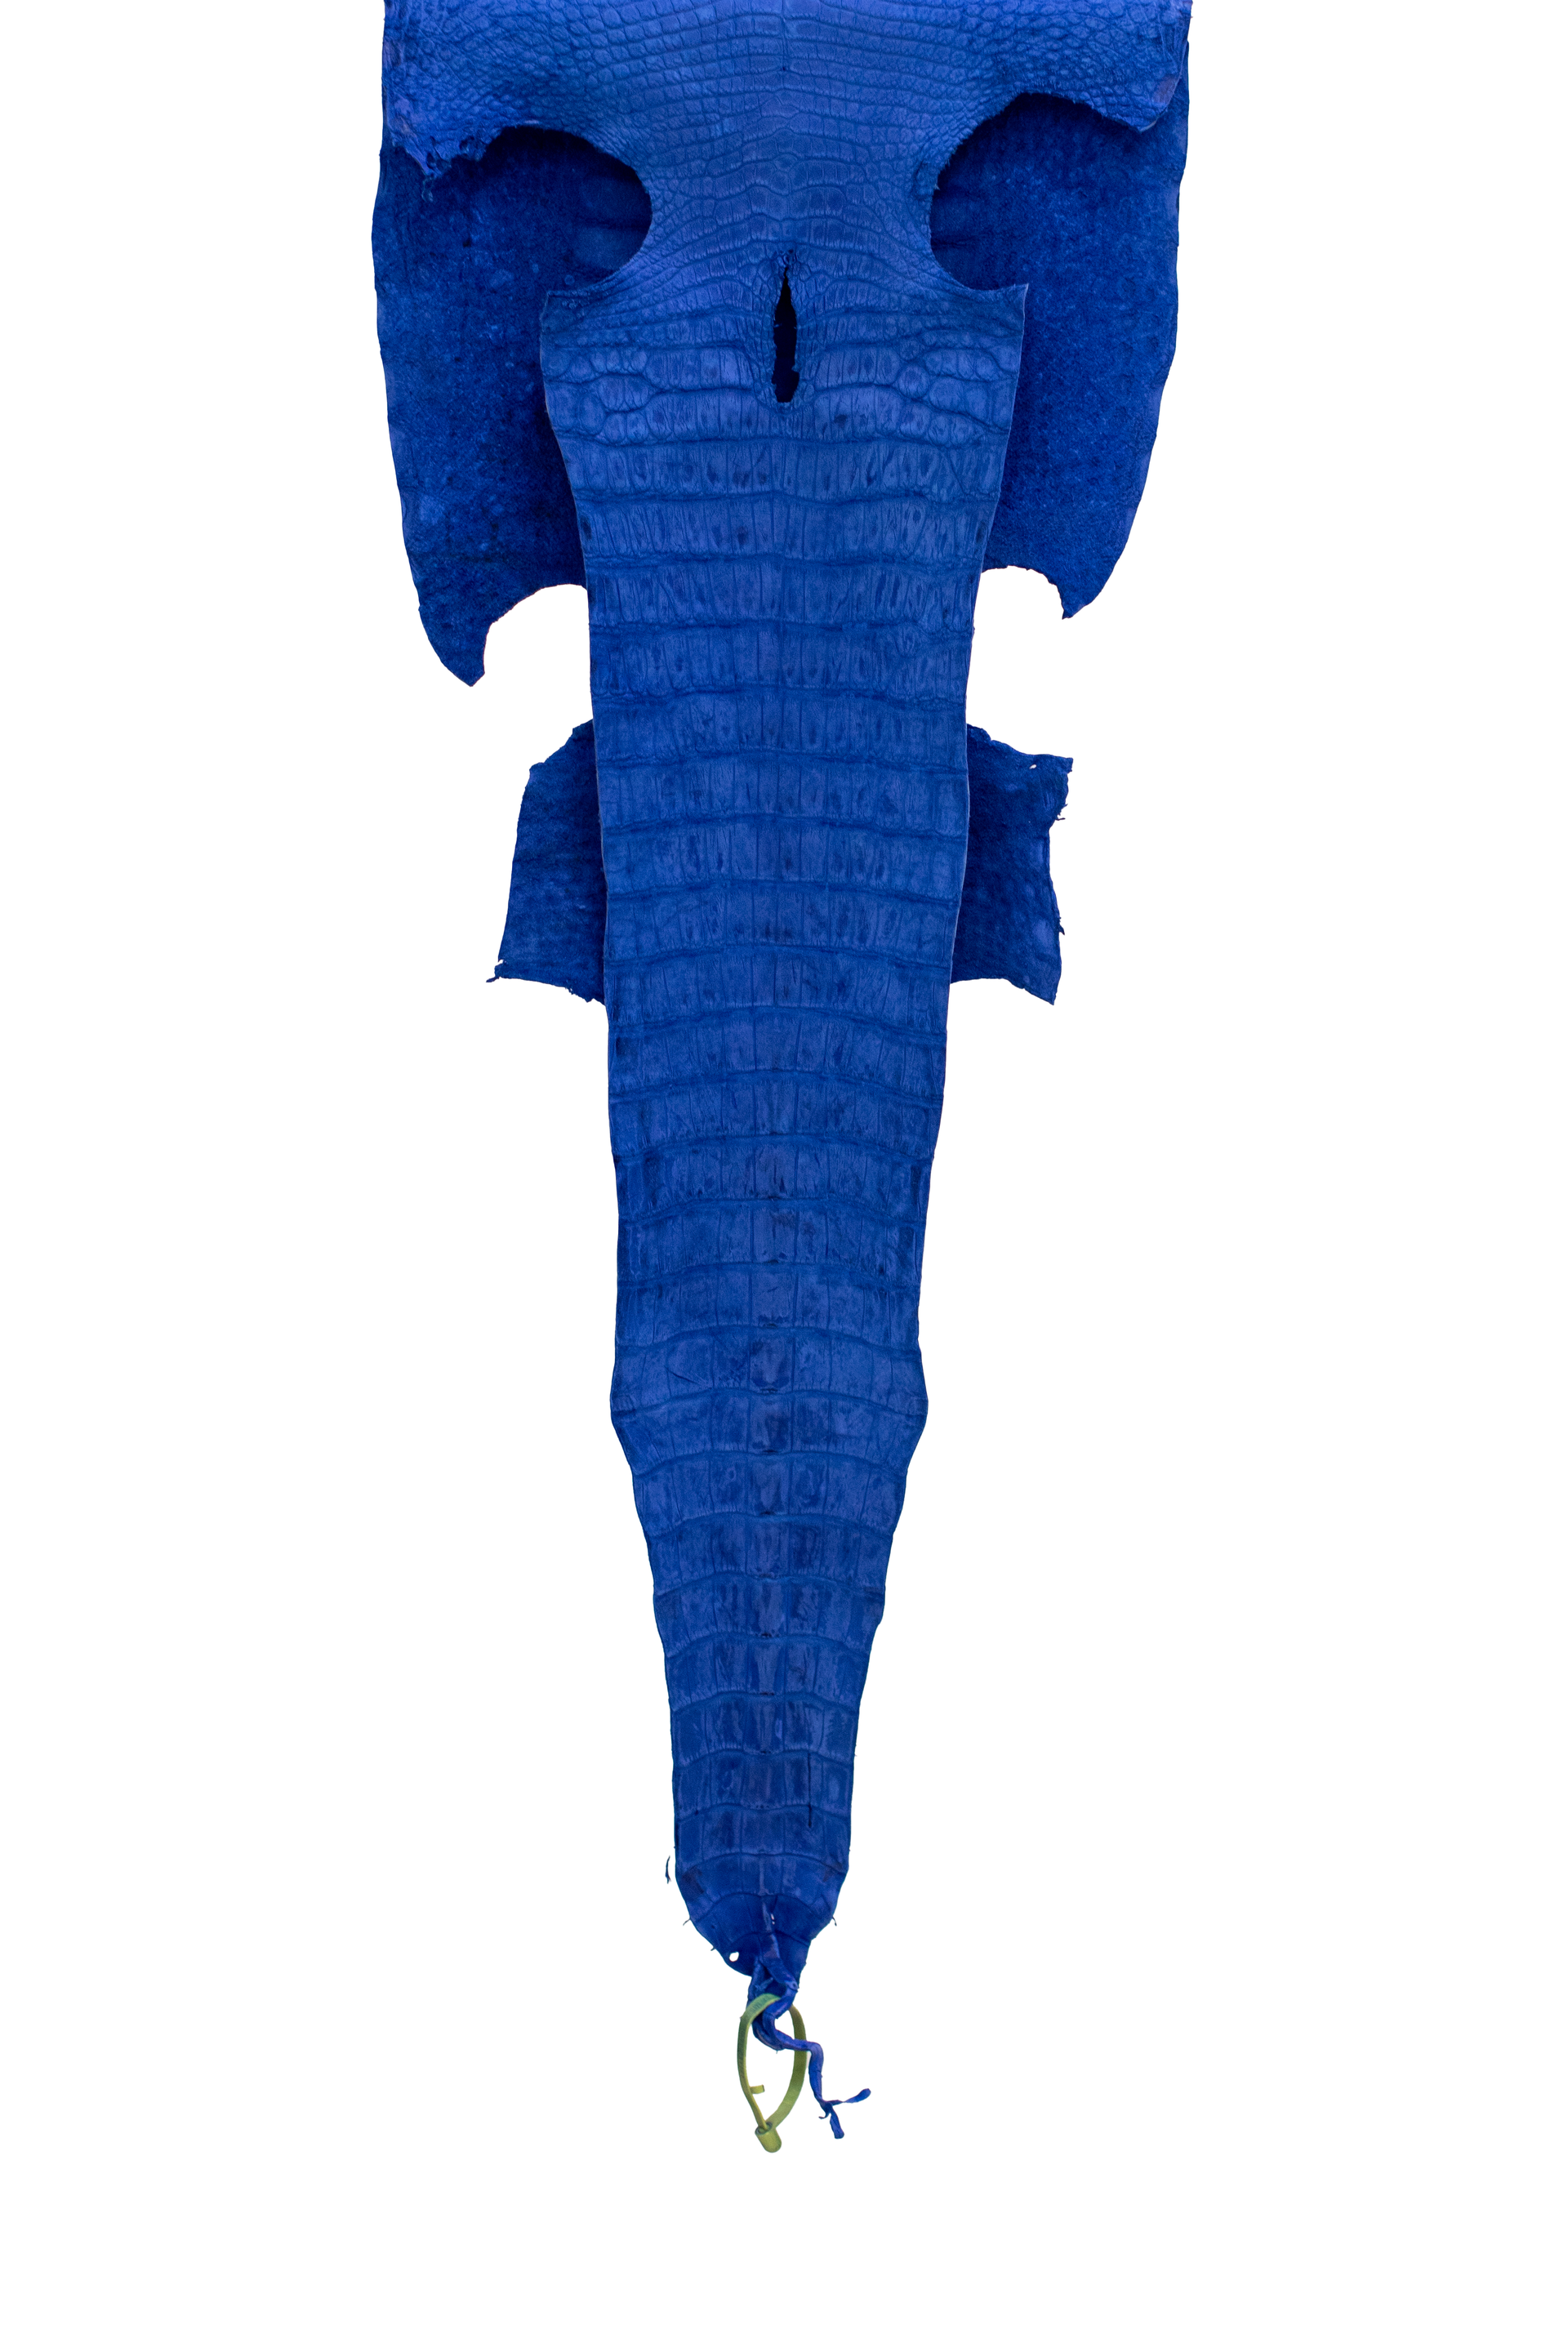 40 cm Grade 3/4 Navy Blue Nubuck Wild American Alligator Leather - Tag: LA22-0031267